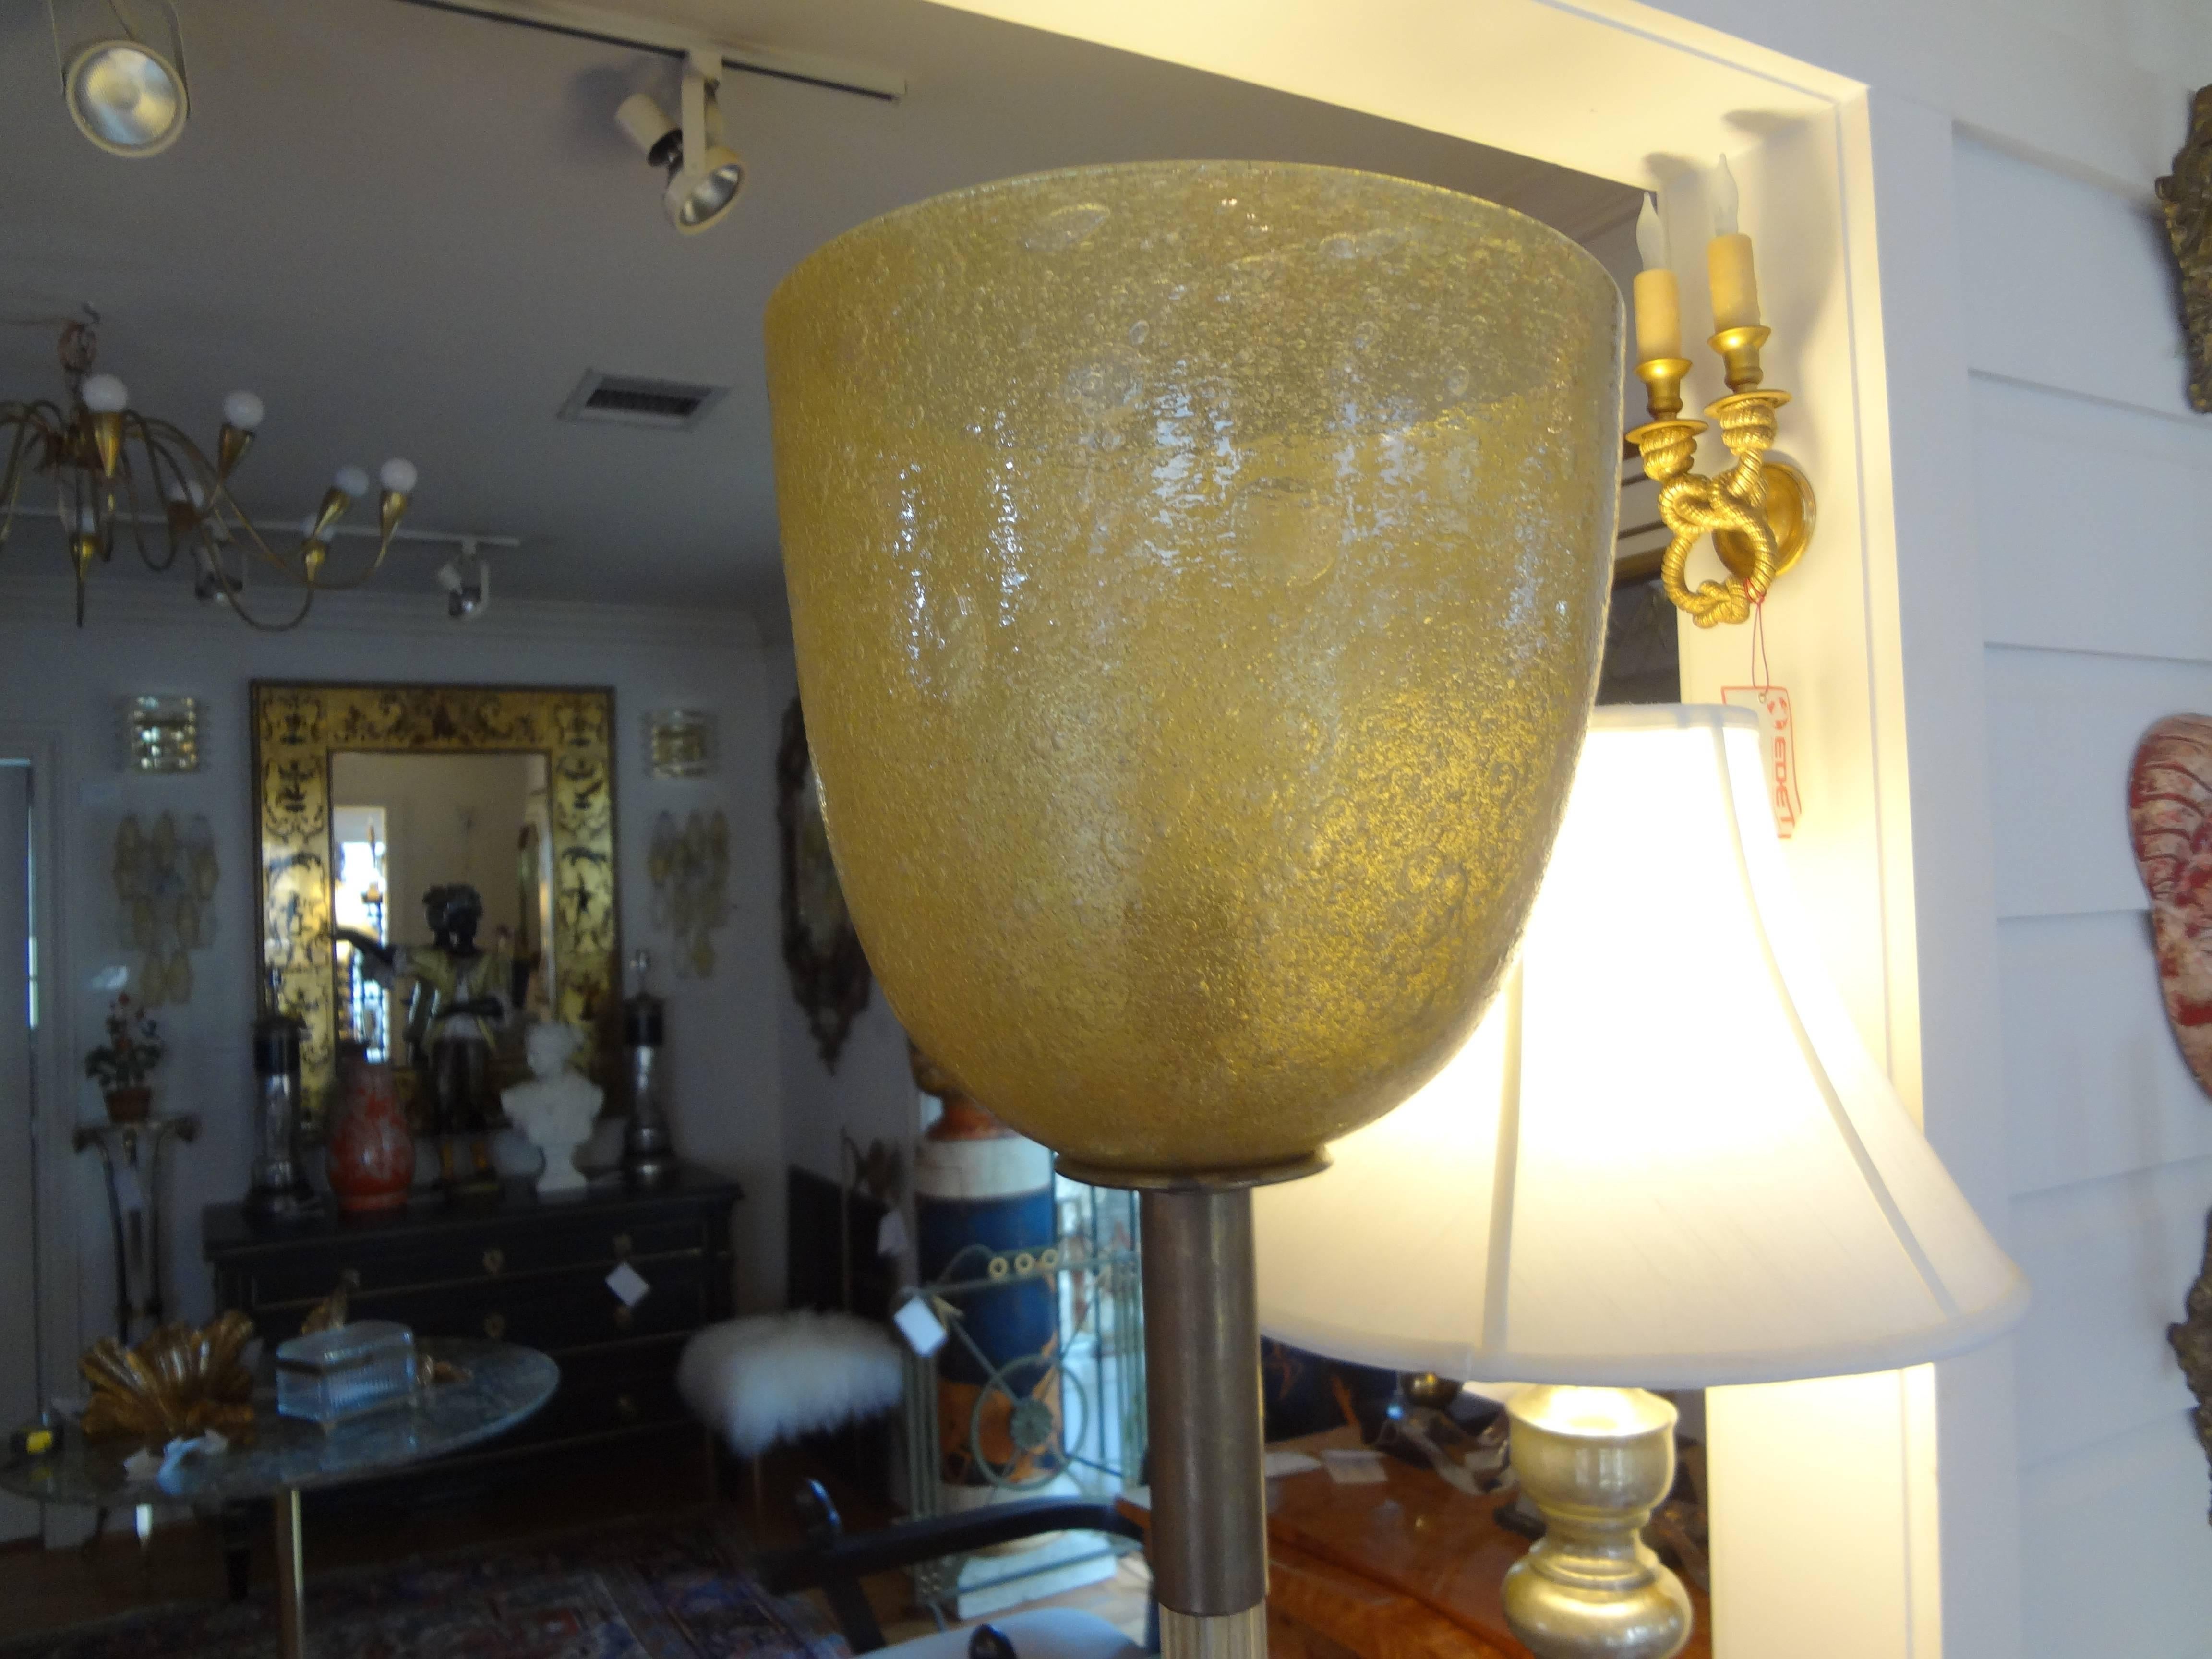 Lampadaire en verre de Murano par Seguso, circa 1940.
Superbe lampadaire de Murano par Seguso, circa 1940. Verre infusé d'or avec un abat-jour Up&Uposo garni de bronze. Les dimensions totales de notre torchère en verre de Murano sont de 68,75